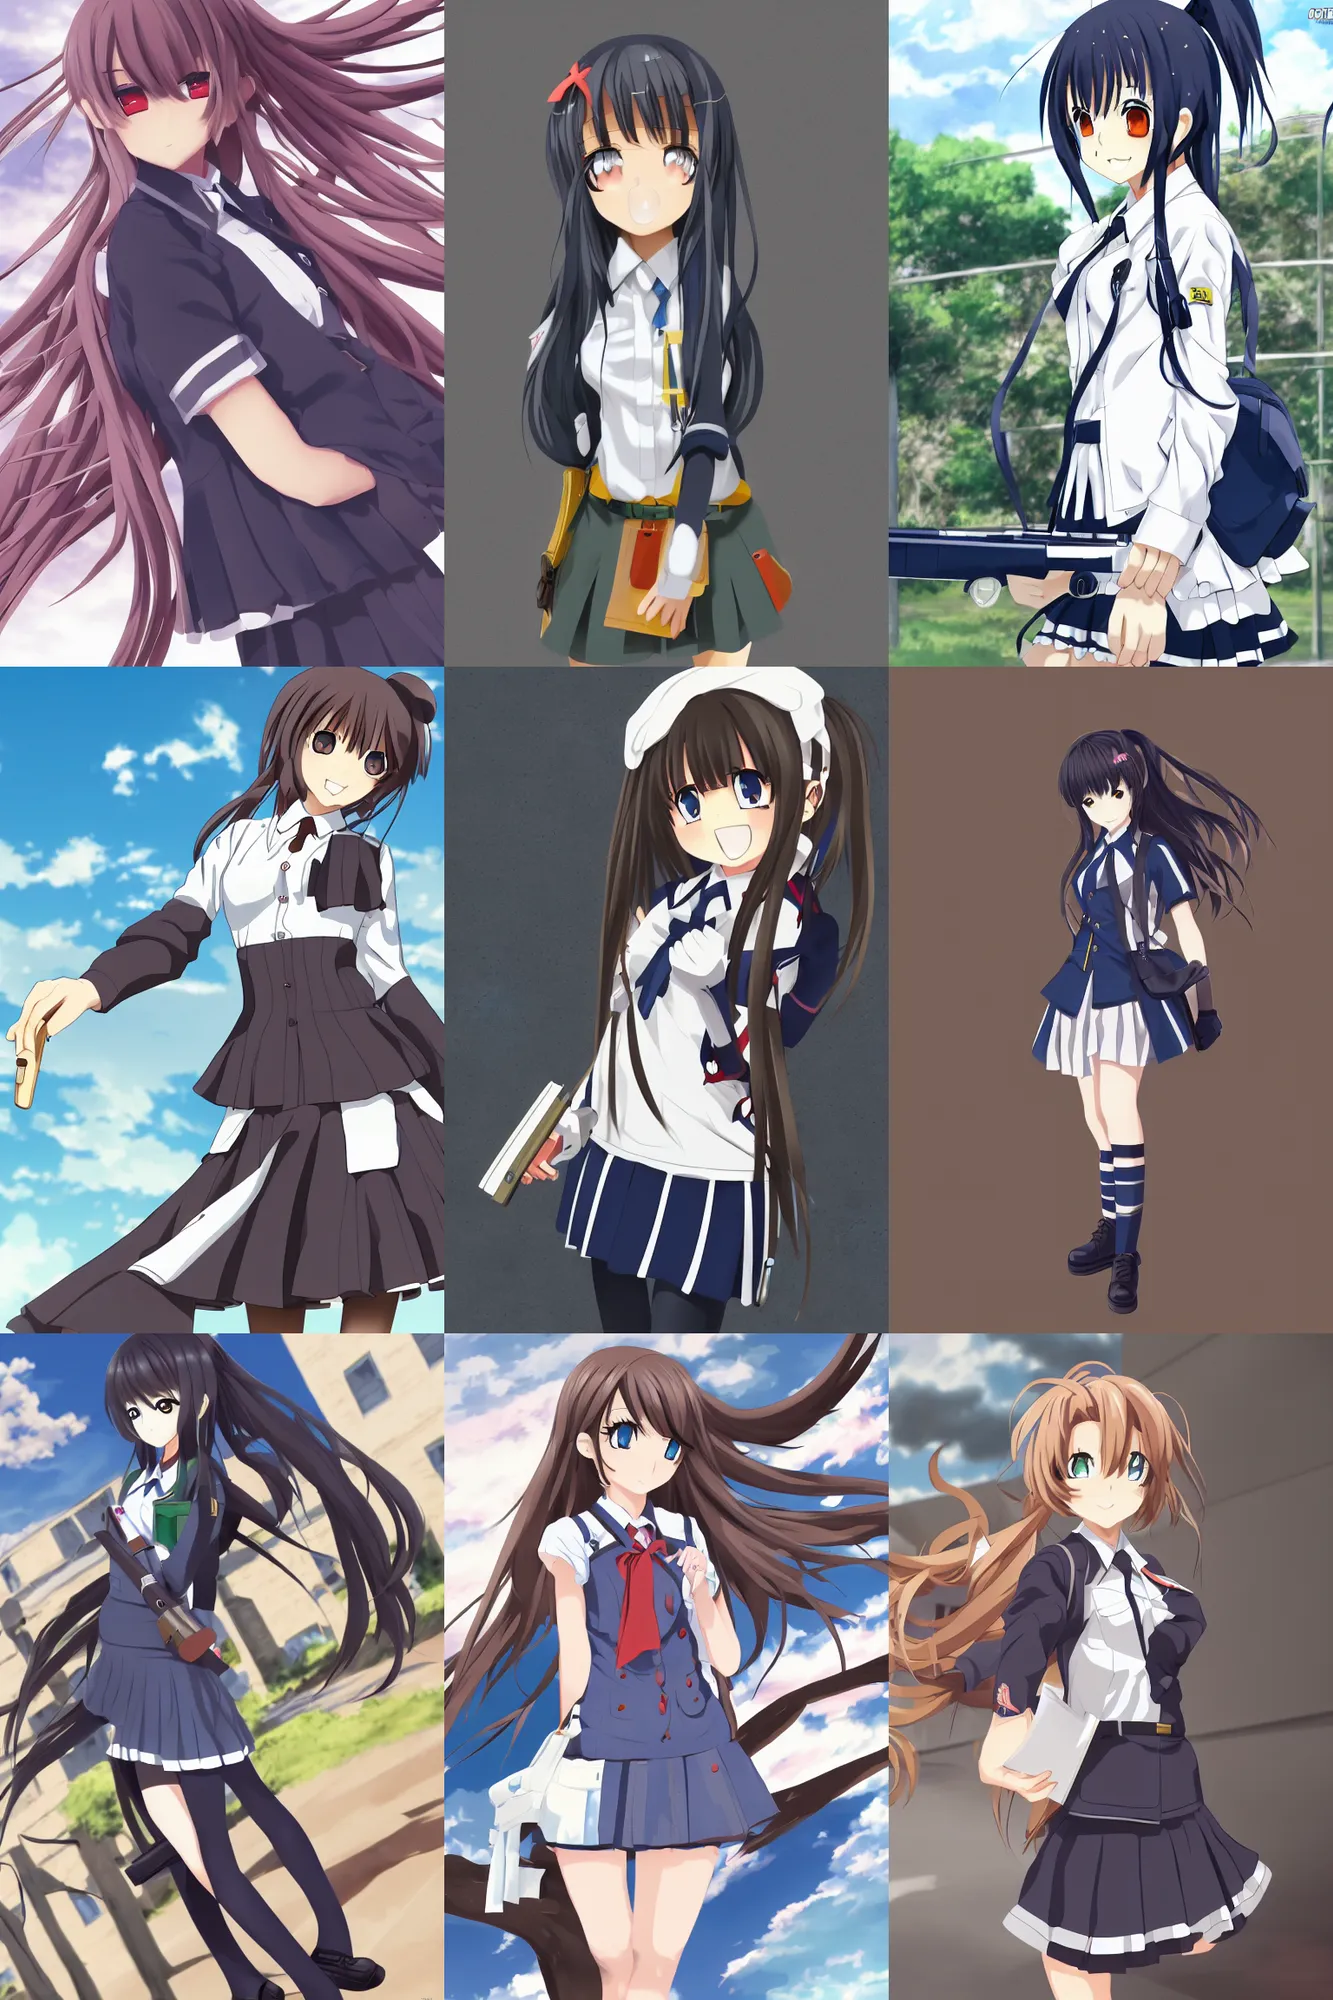 Prompt: anime girl, armed, school uniform, 8 k wallpaper, high detailed, illustration, morandi color scheme